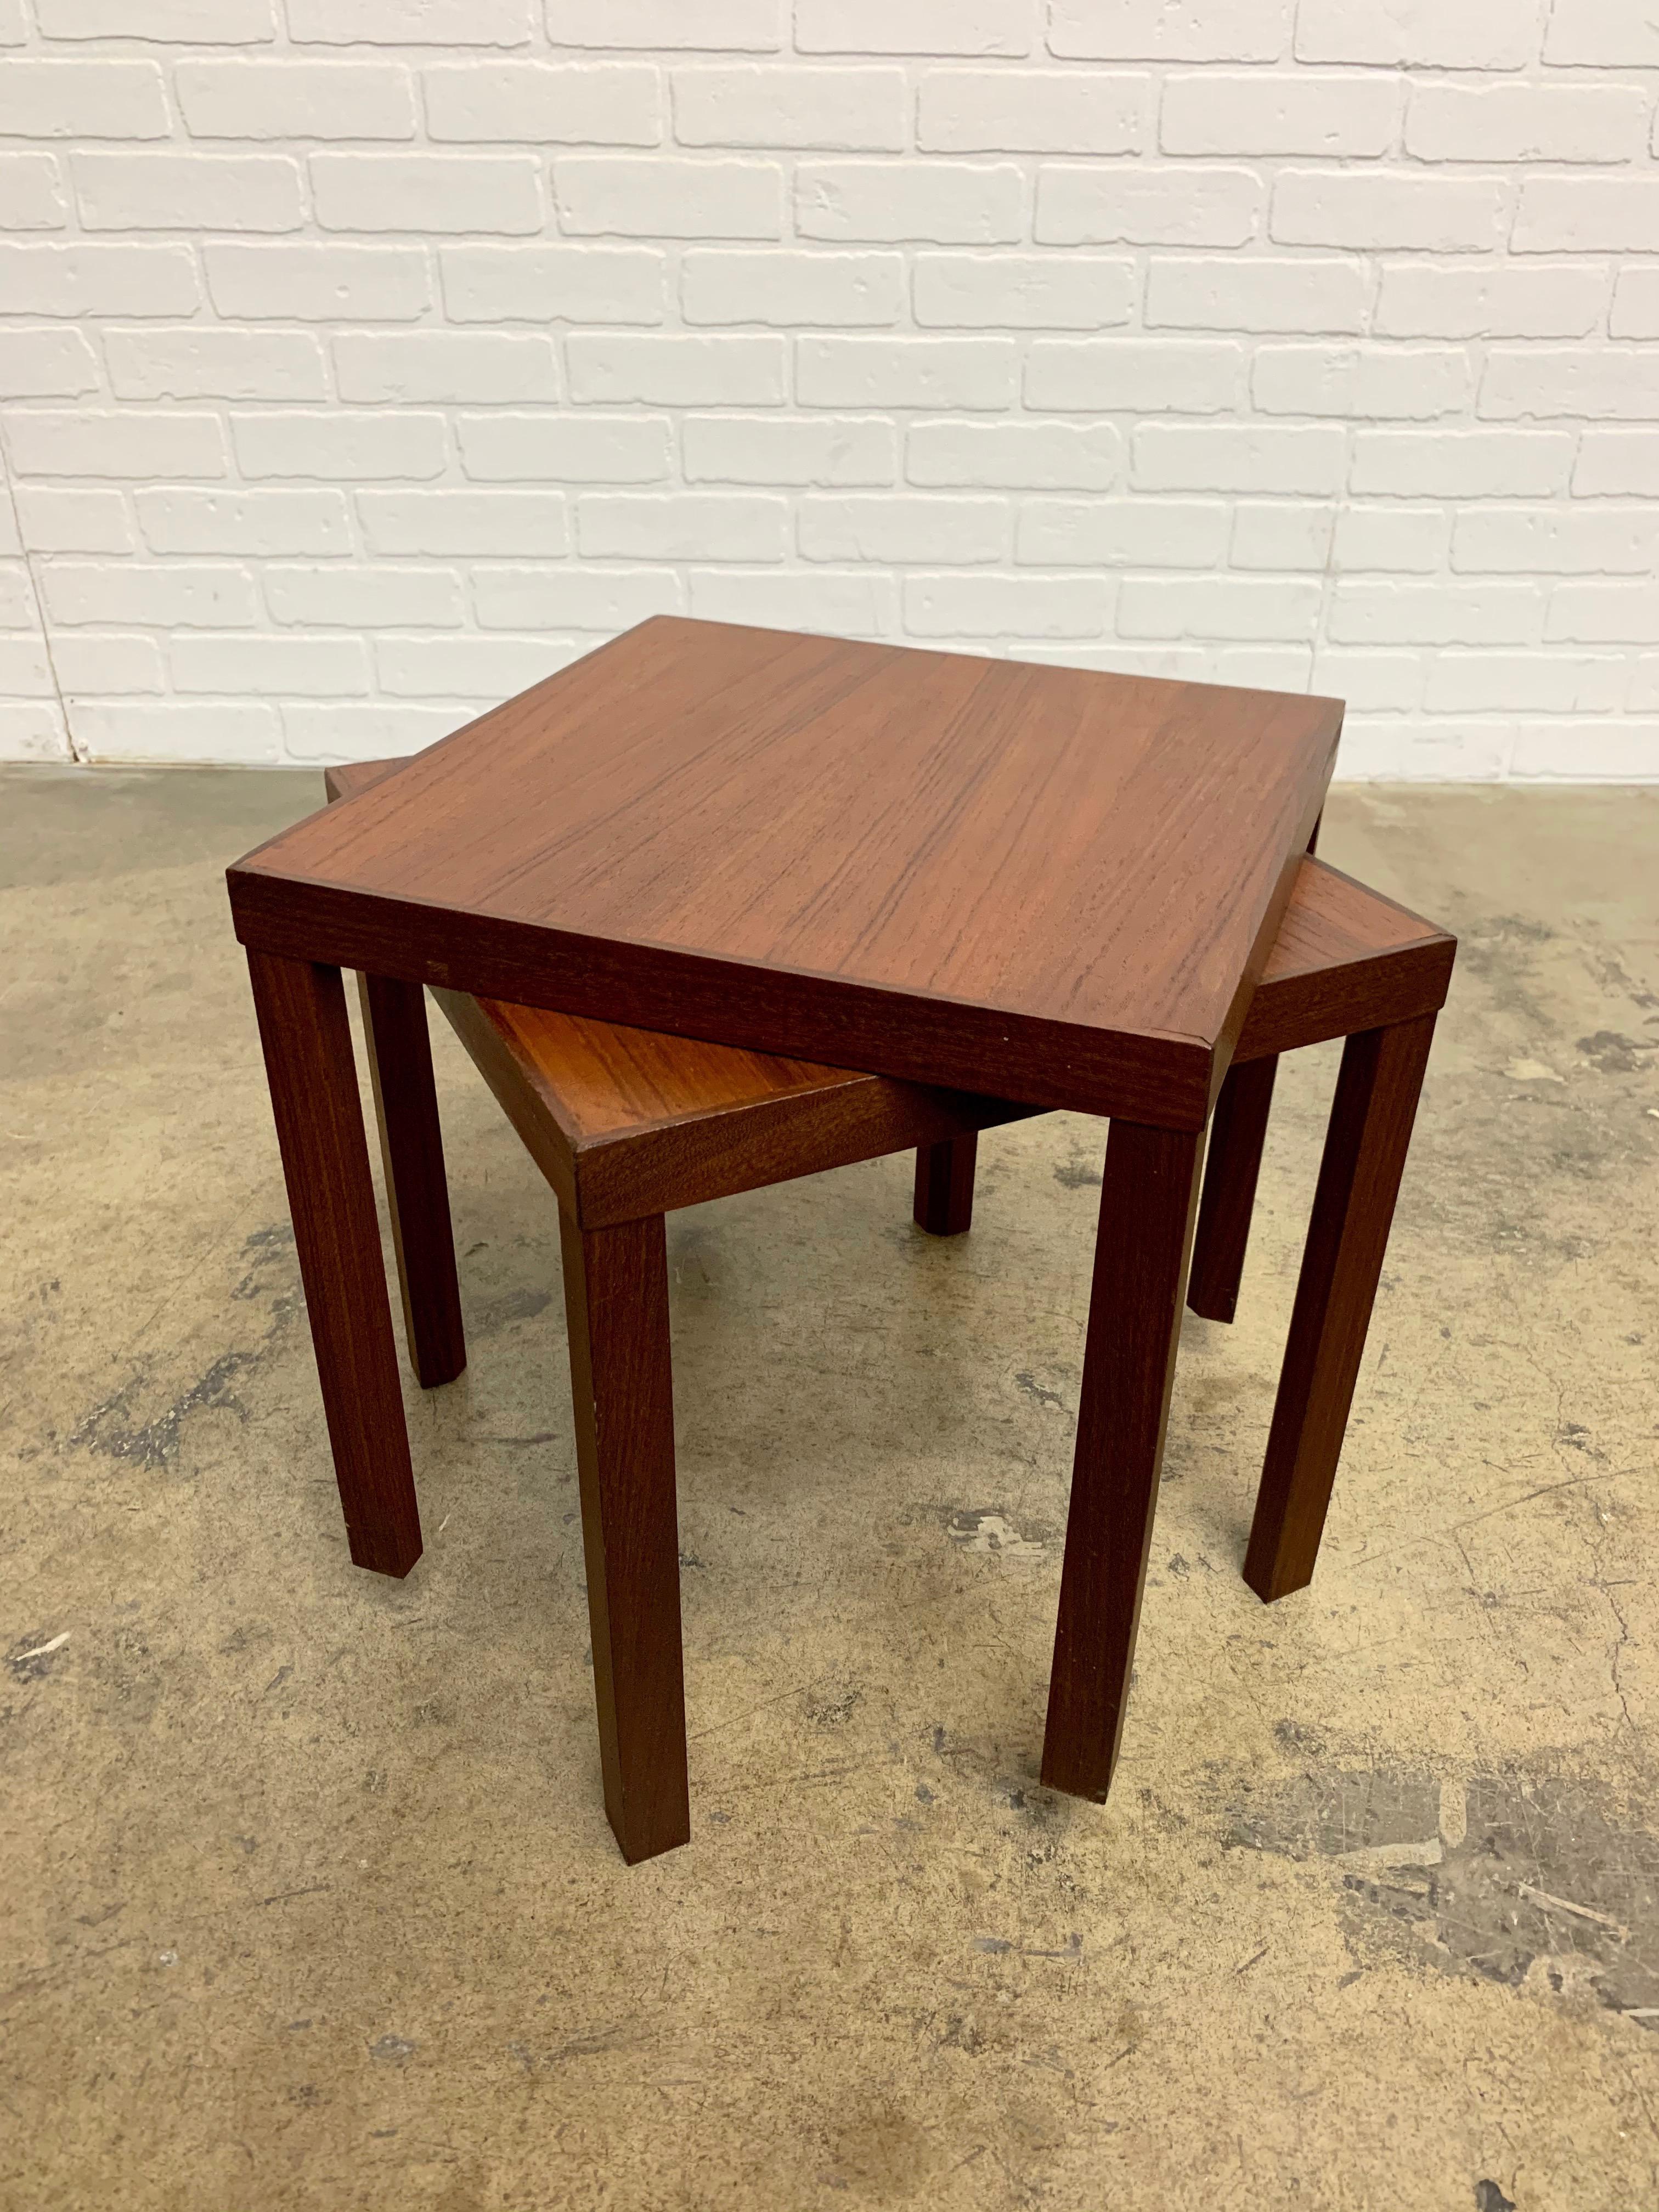 Pair of midcentury Danish modern teak side tables by Hans Olsen.